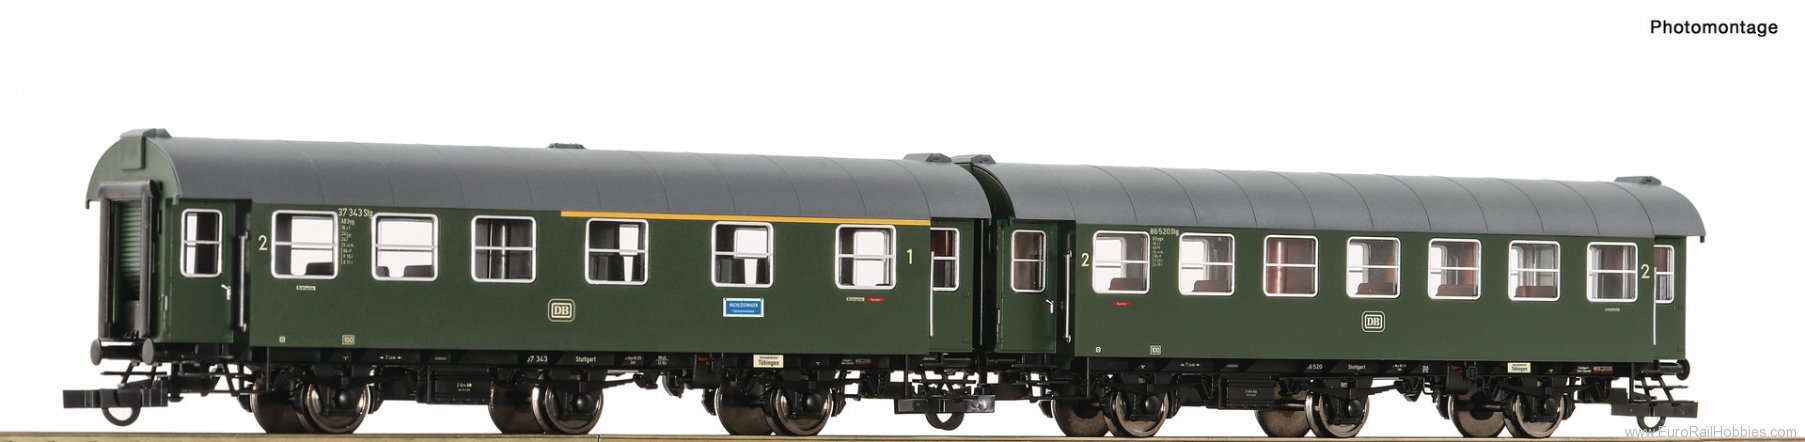 Roco 6200038 2-piece set 1: Conversion coaches, DB